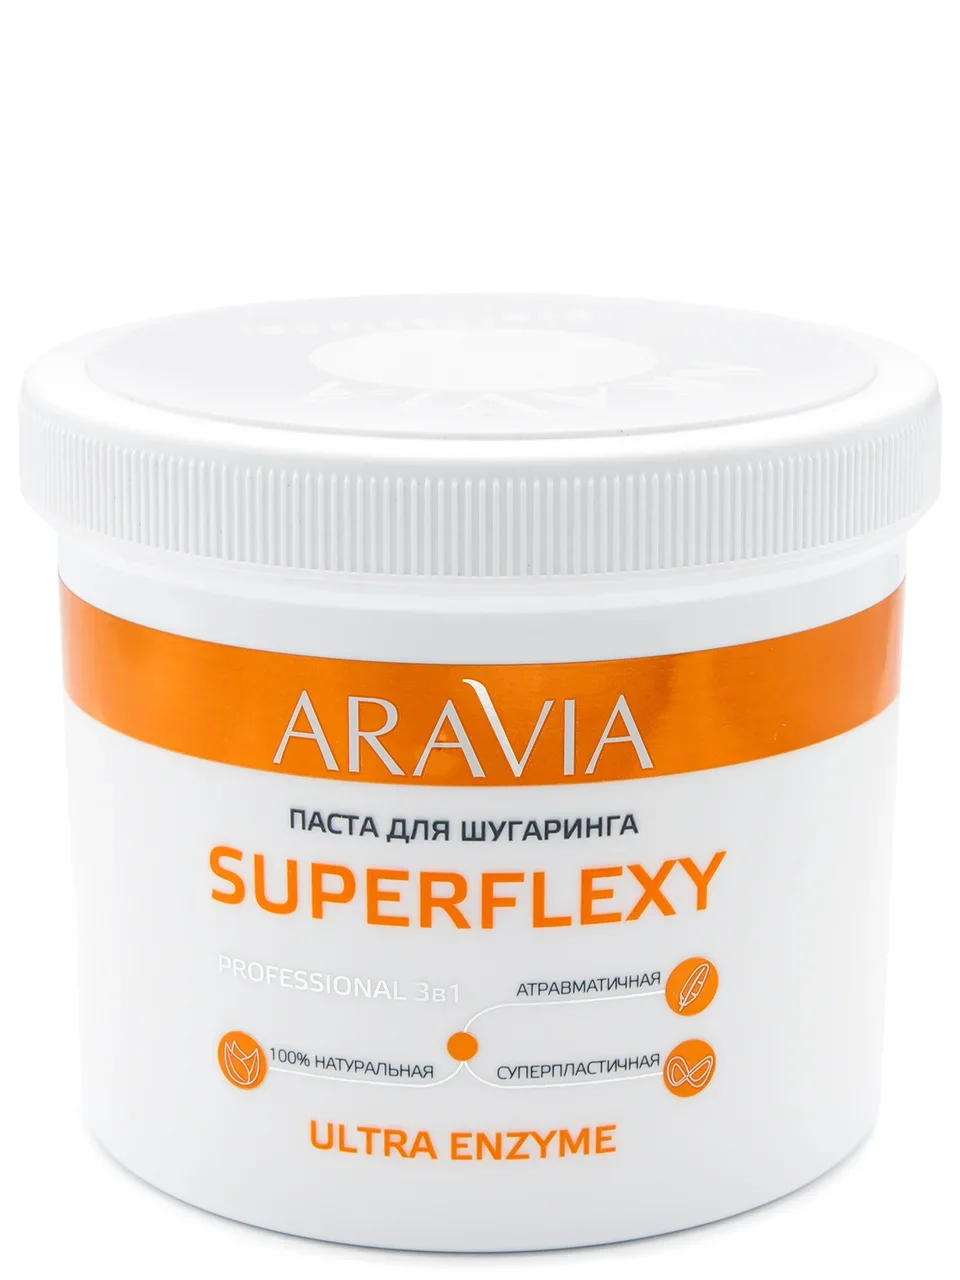 Паста для шугаринга Aravia Professional Superflexy Ultra Enzyme 750 г aravia паста для шугаринга superflexy white cream 750 г